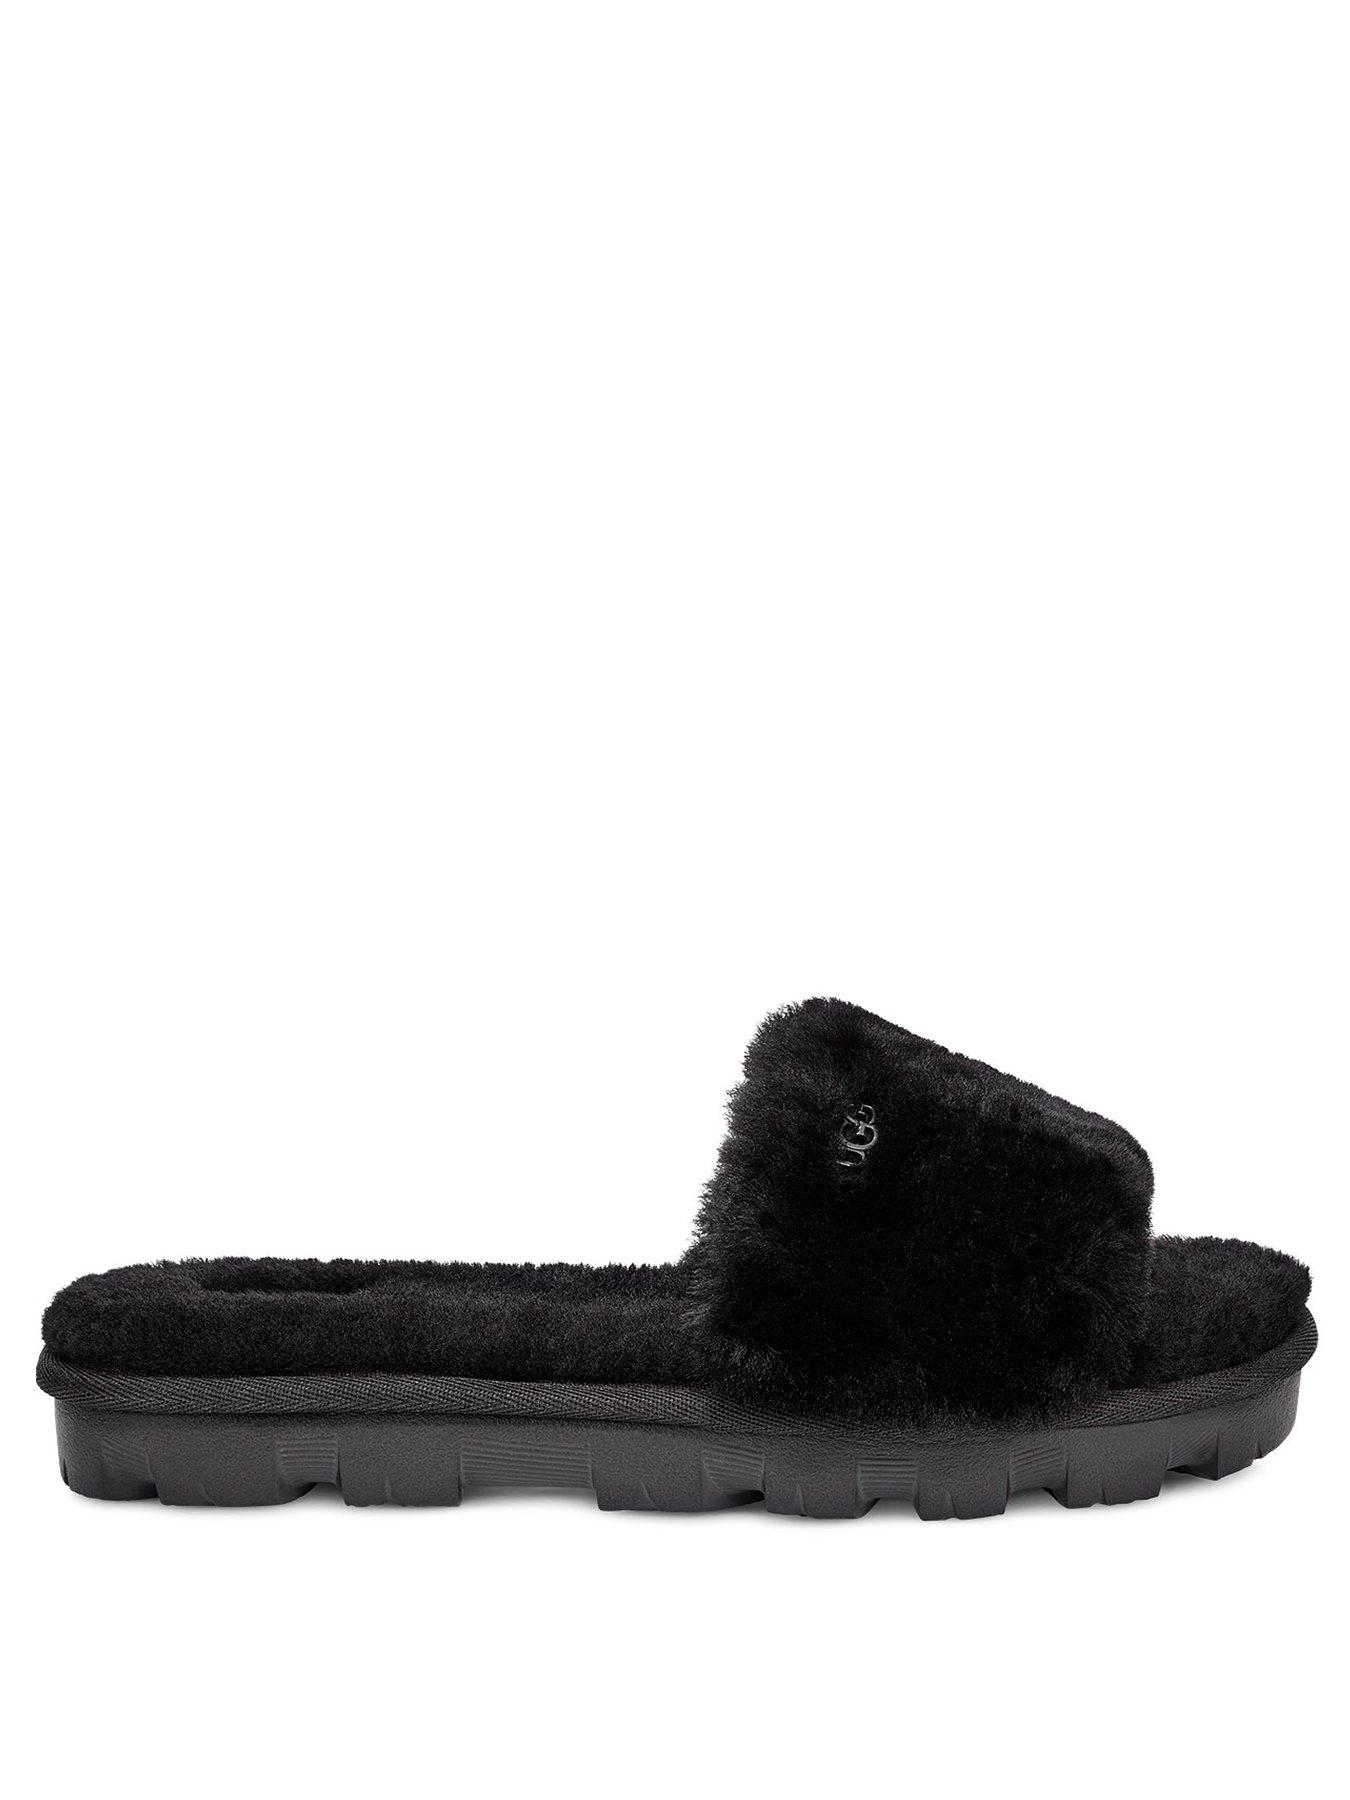 black ugg slippers